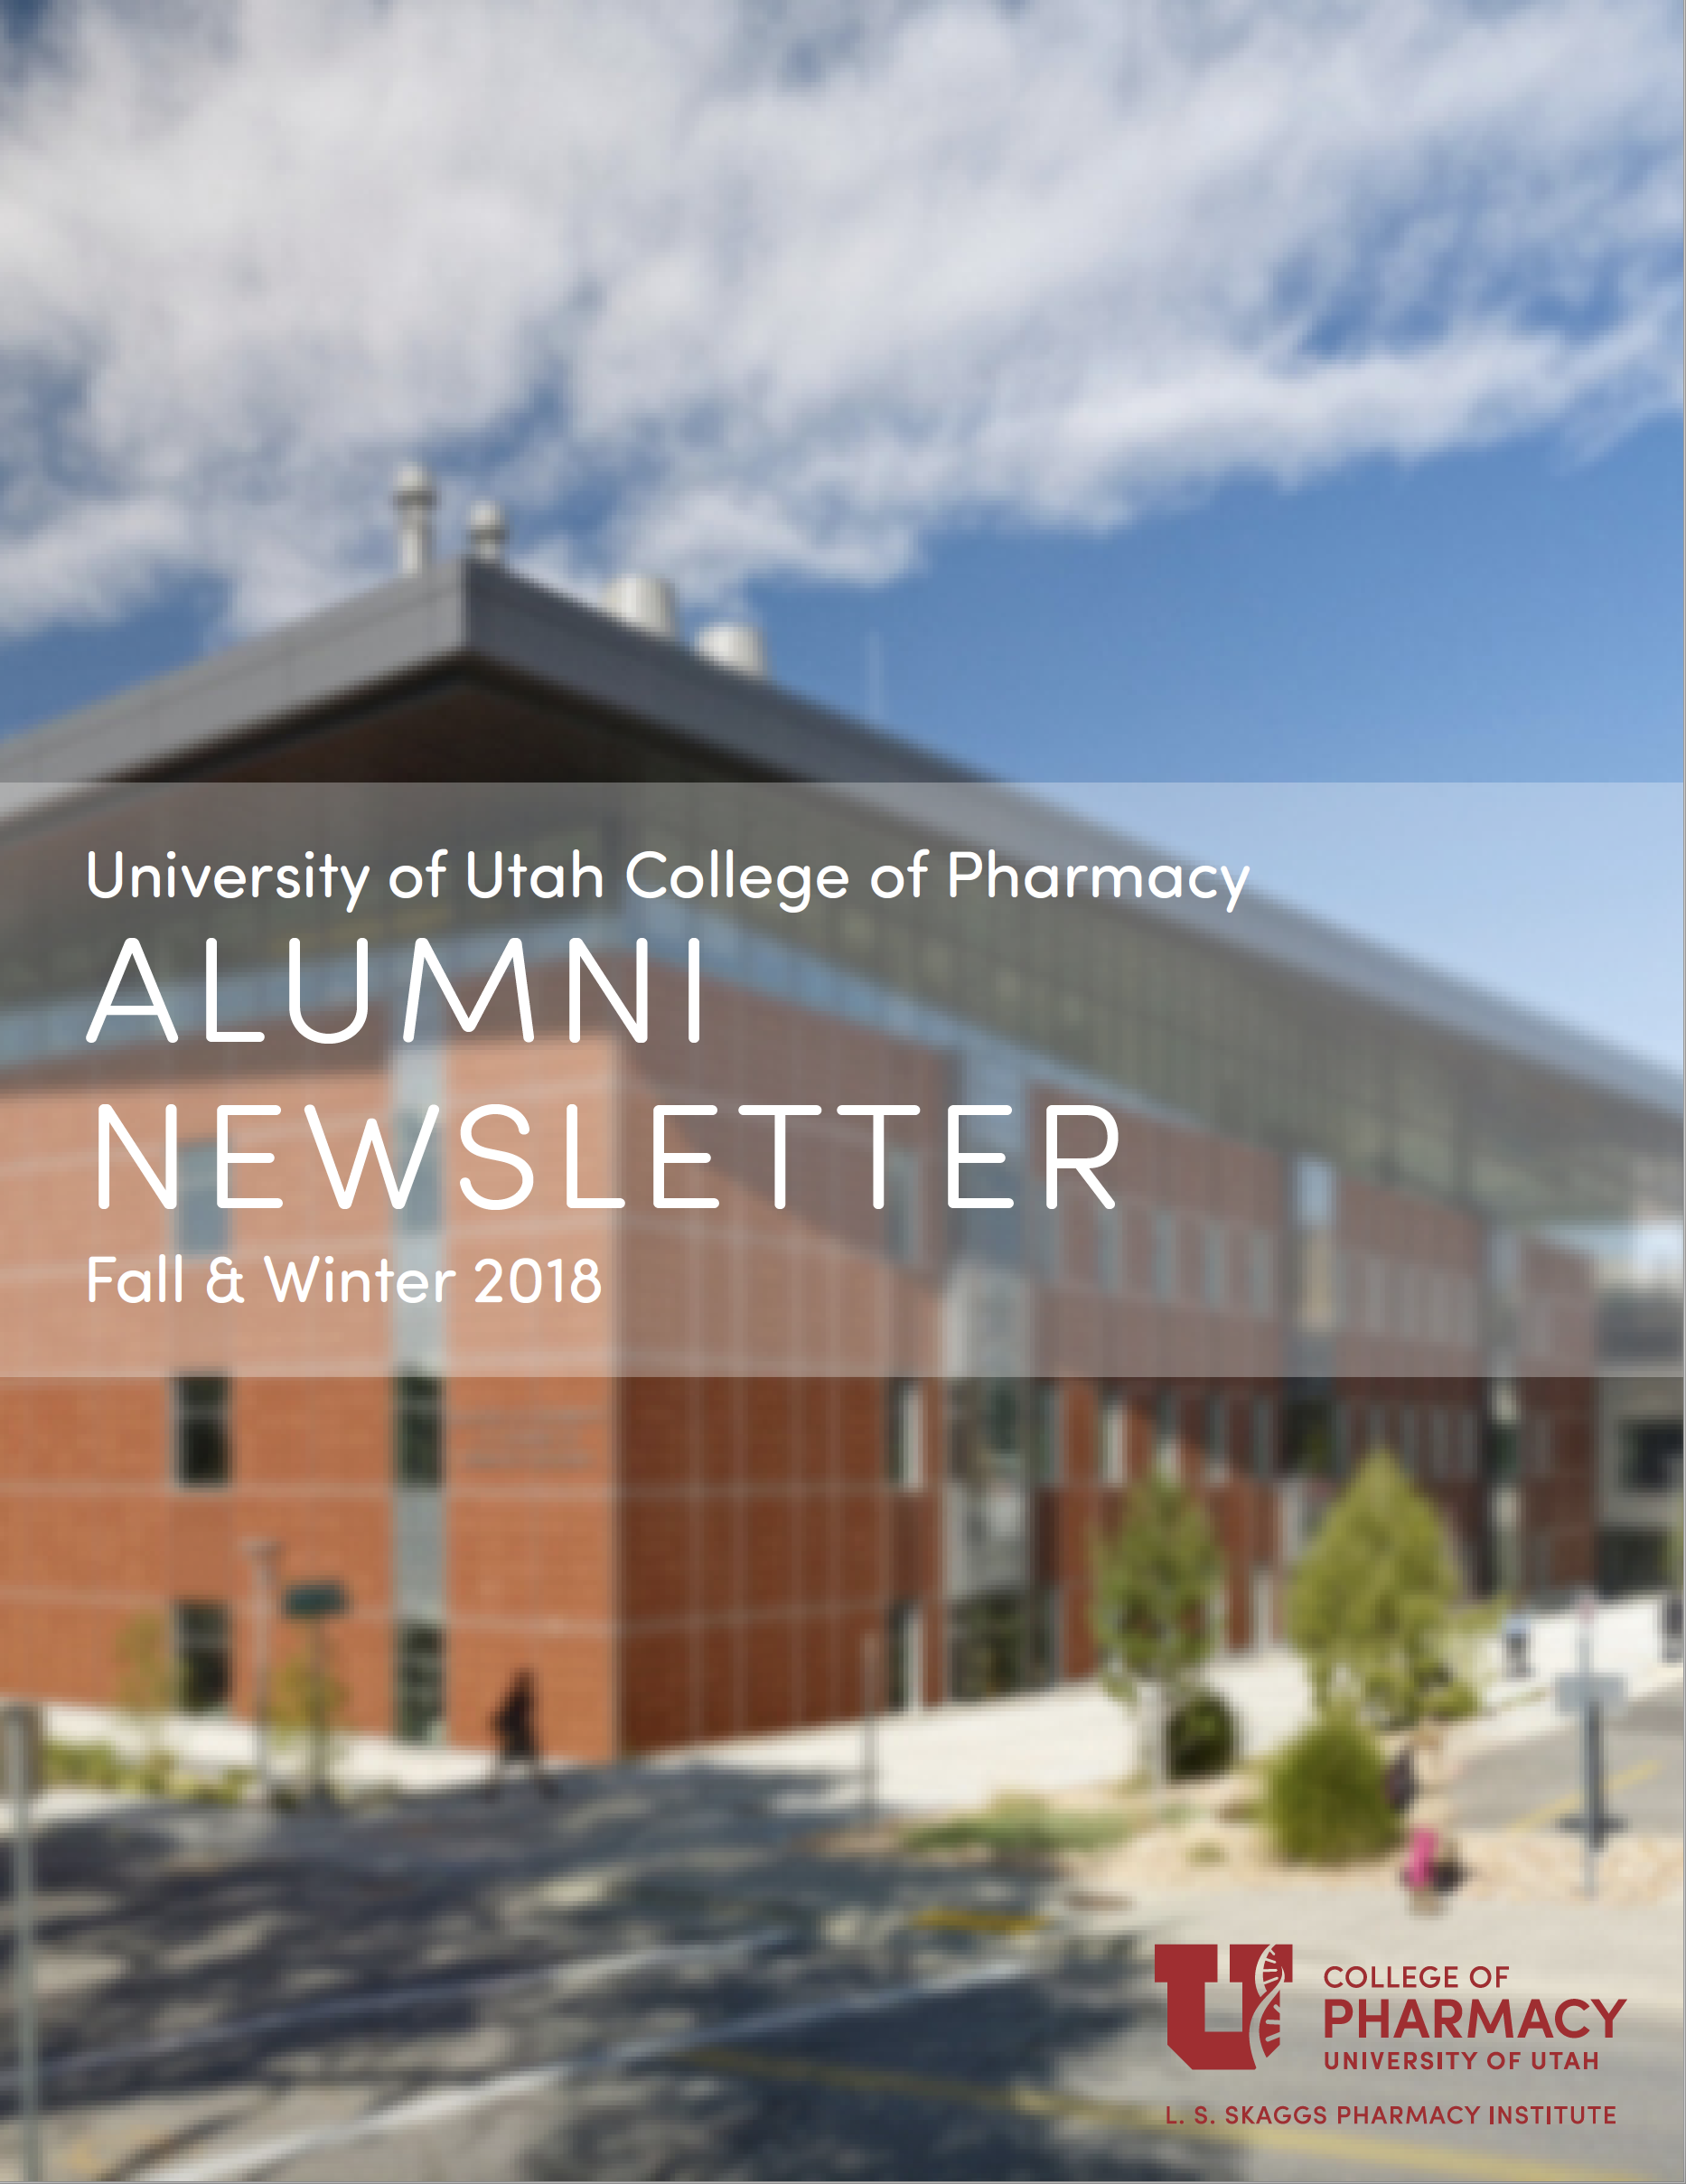 Alumni newsletter fall/winter 2018-19 cover